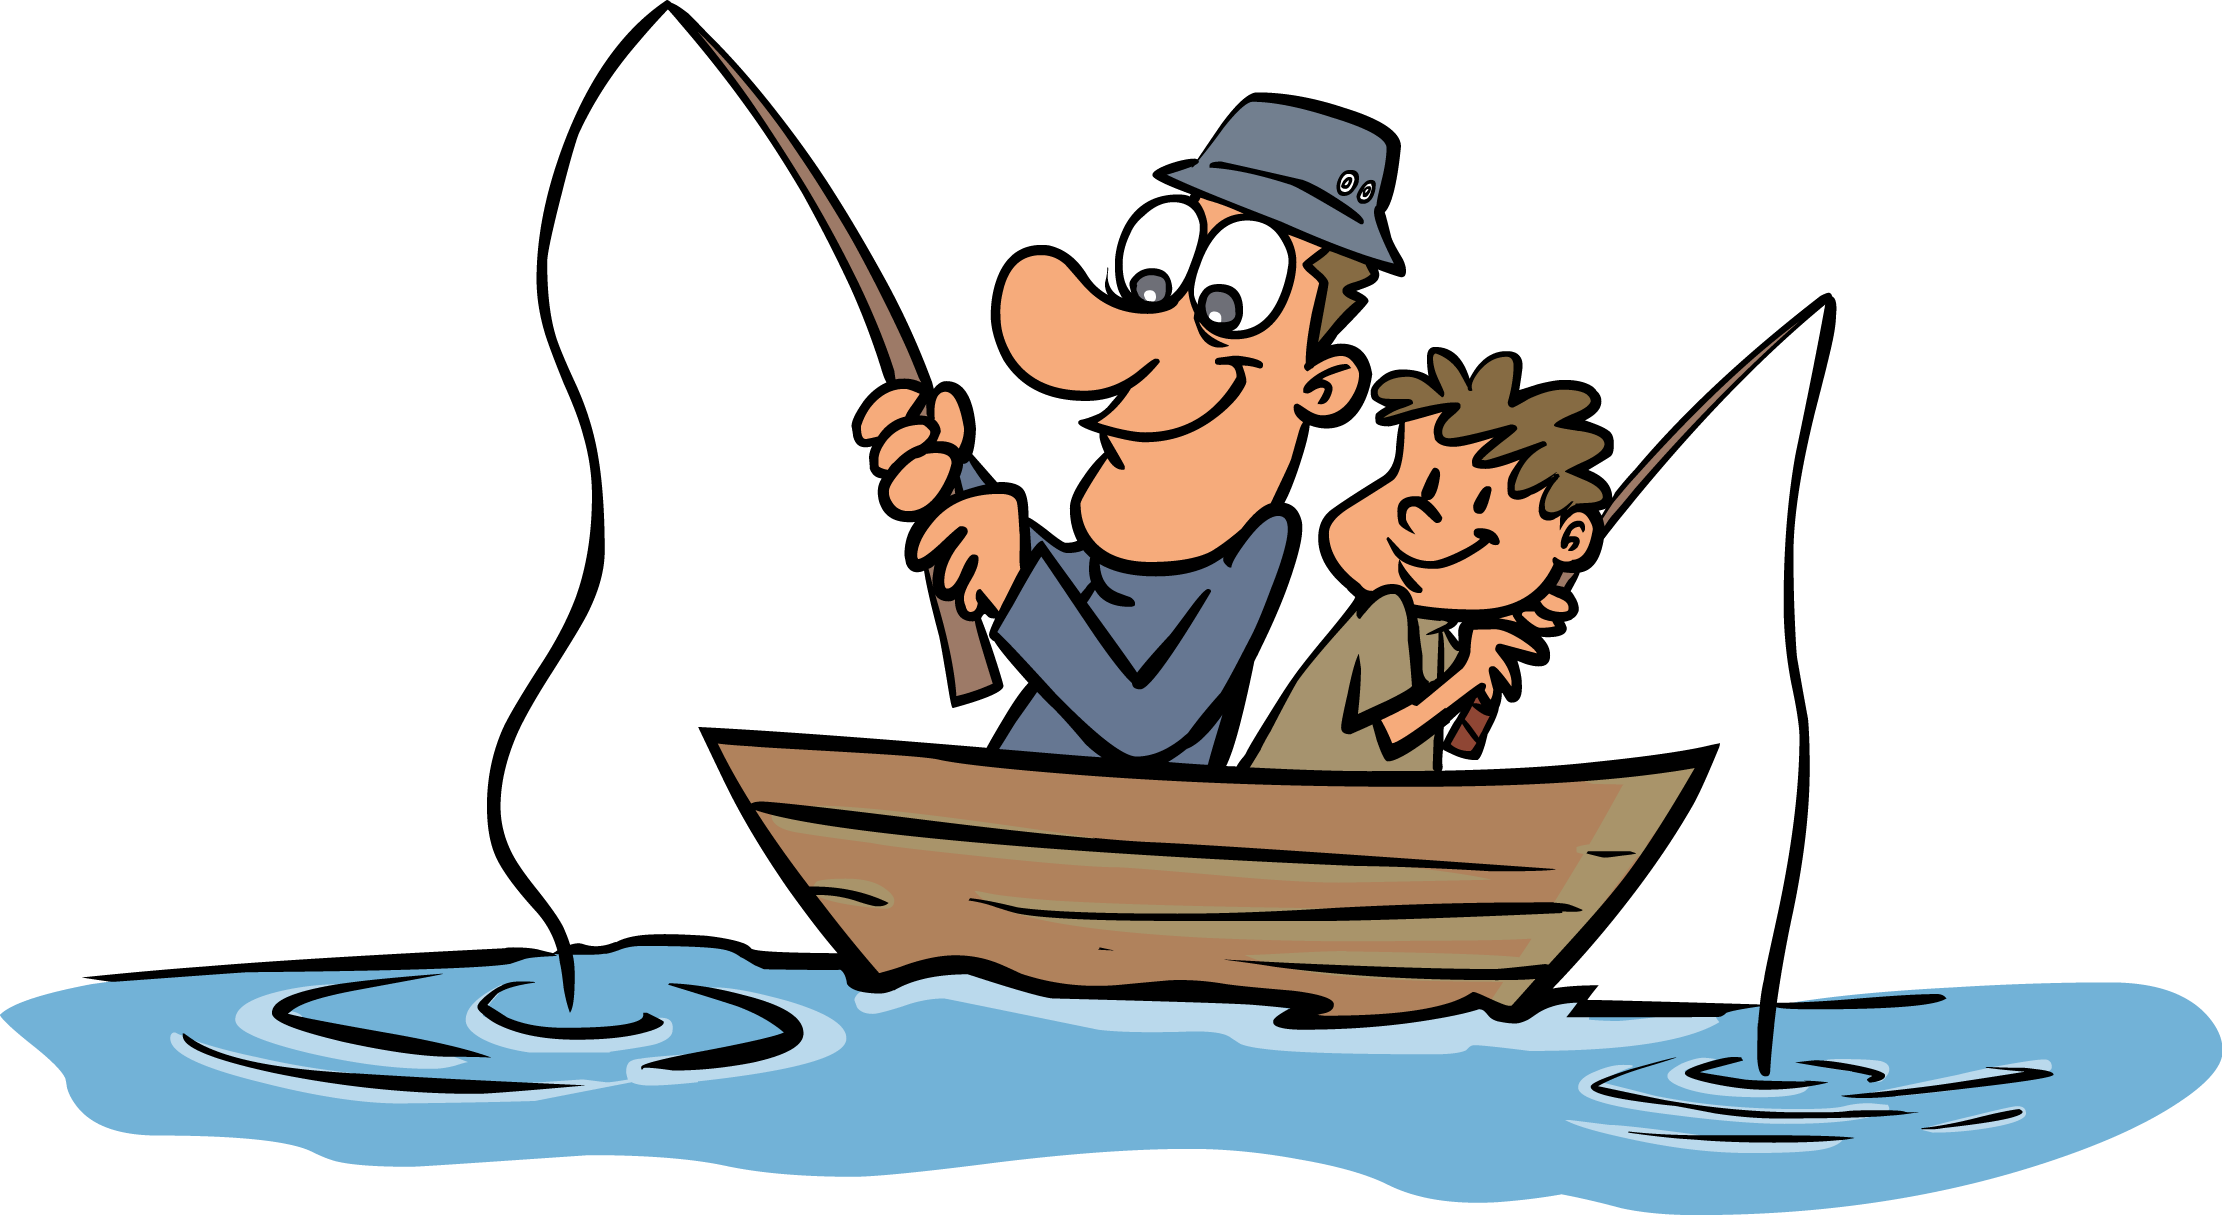 Funny Fisherman Cartoon   Clipart Best